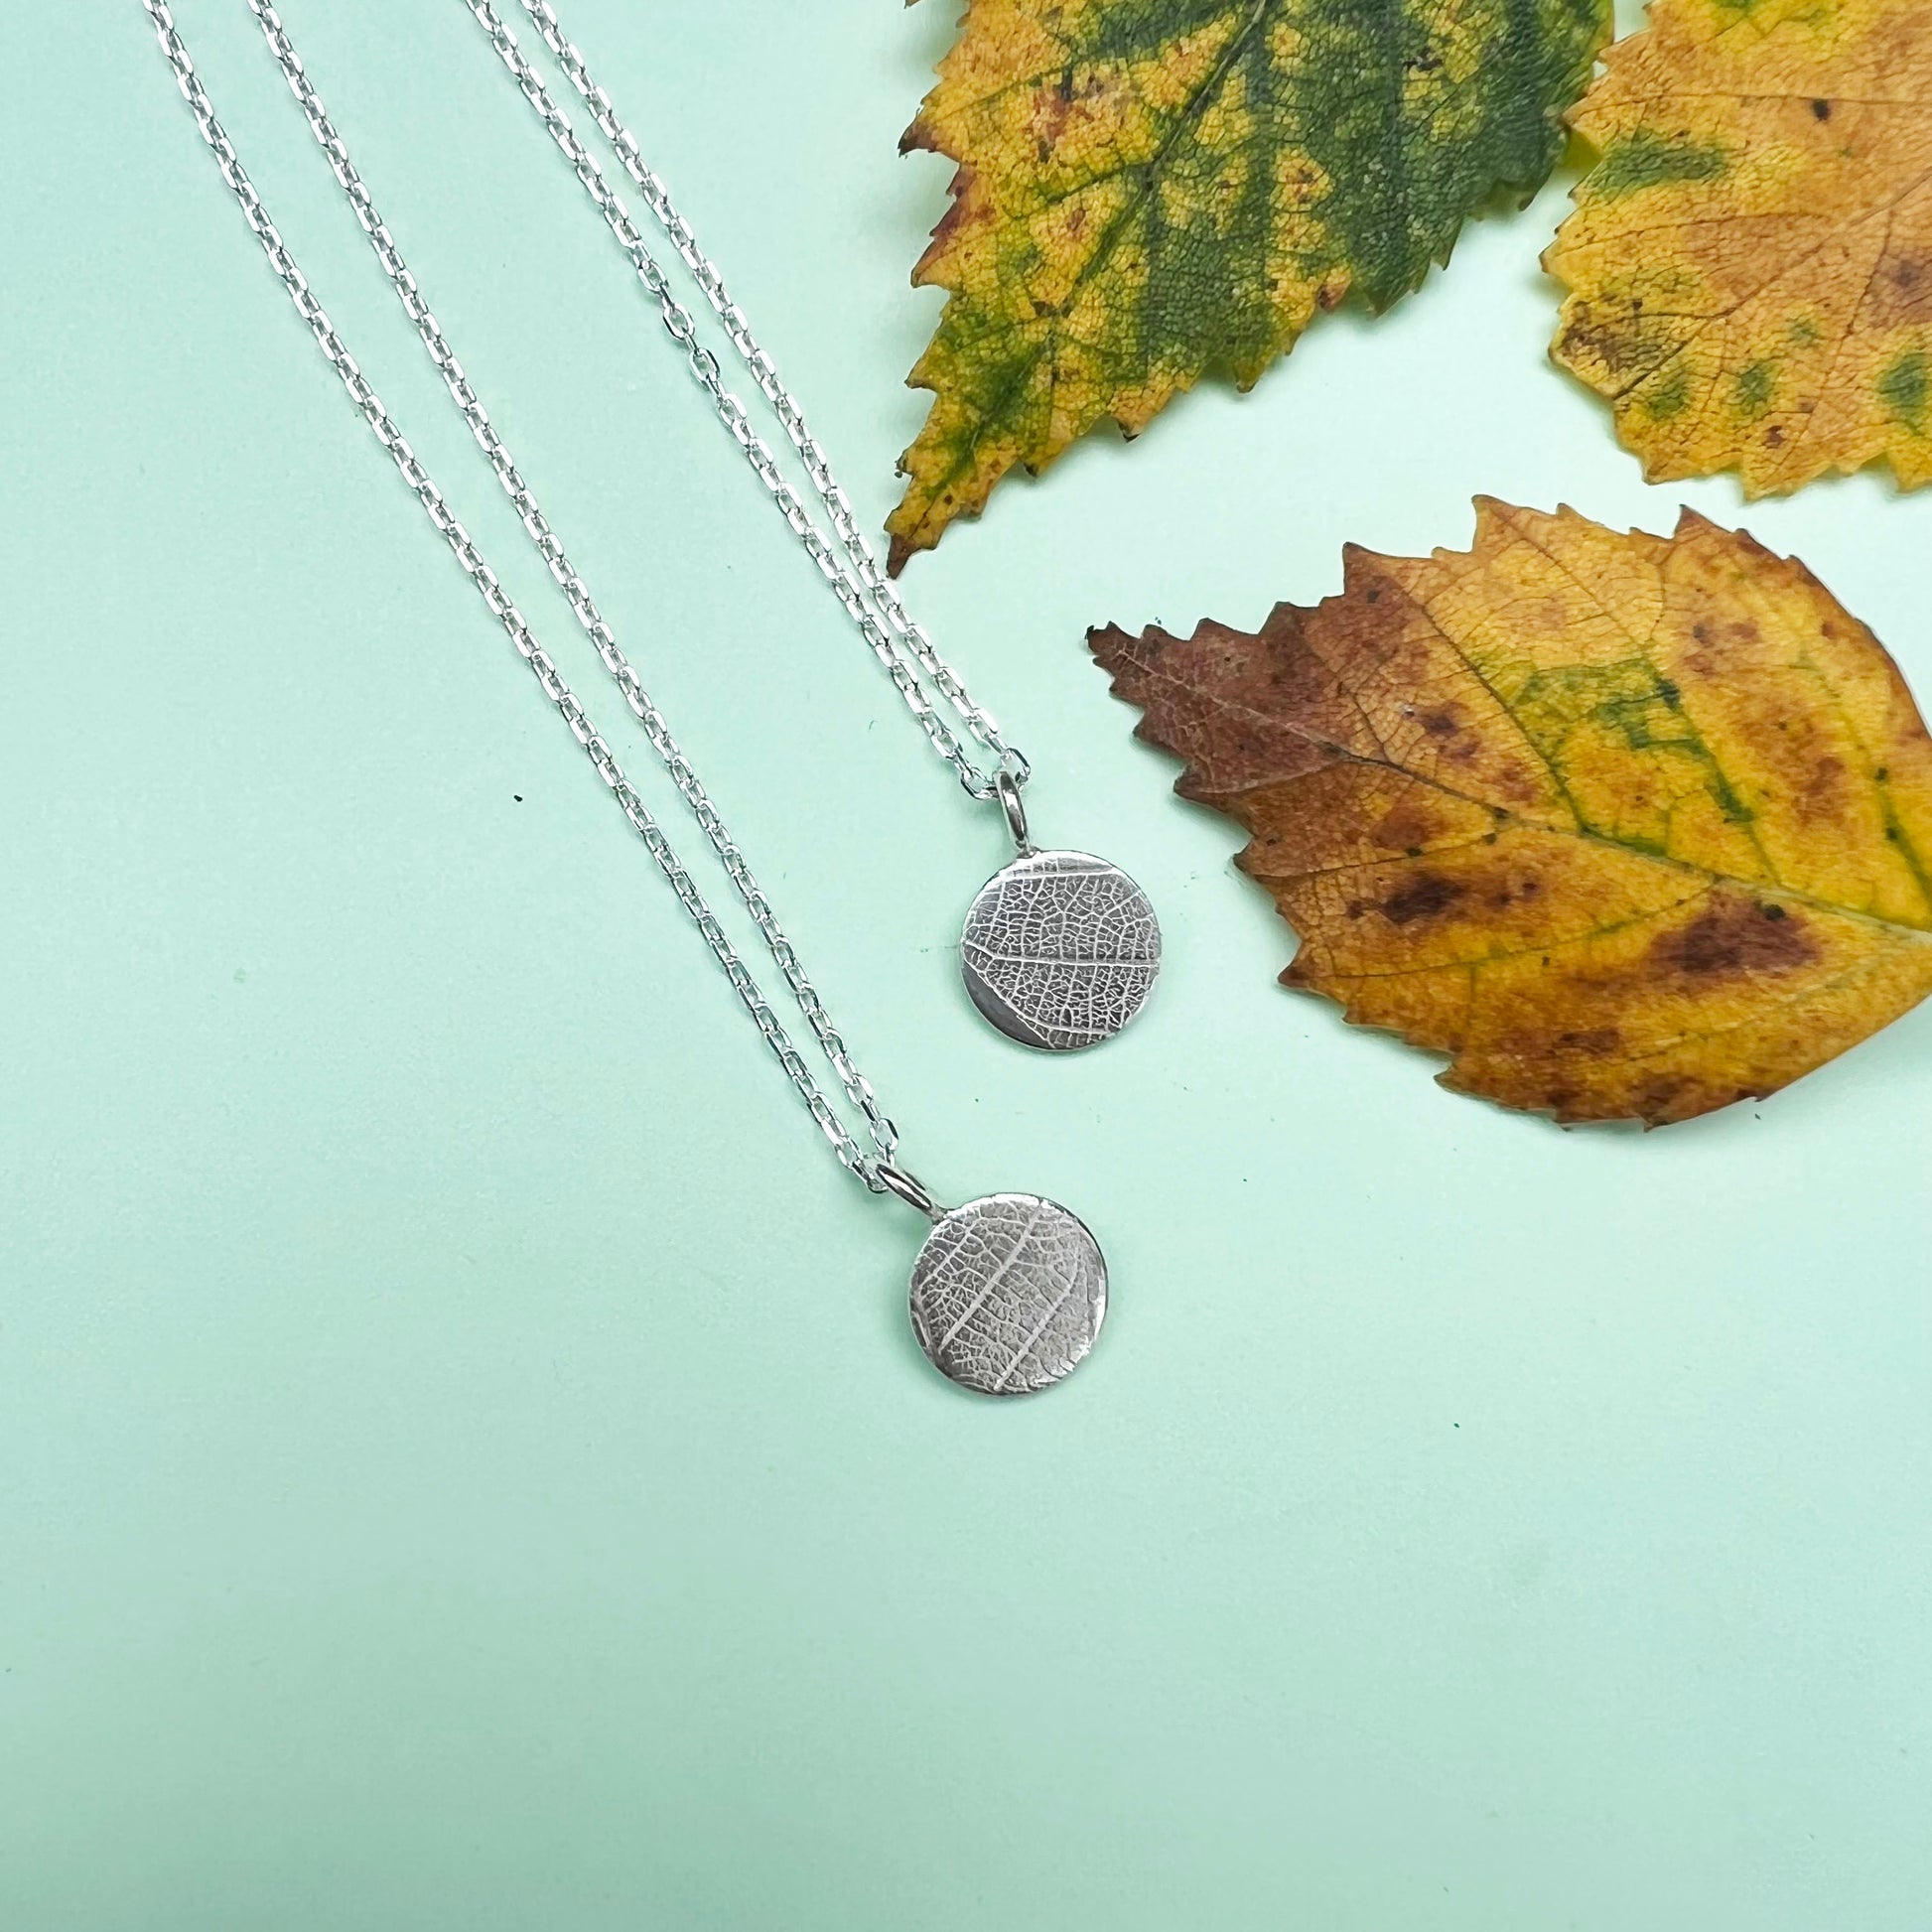 sterling silver necklace, silver birch handmade necklace, sterling silver birch necklace, silver birch necklace, unique birch necklace, silver necklace